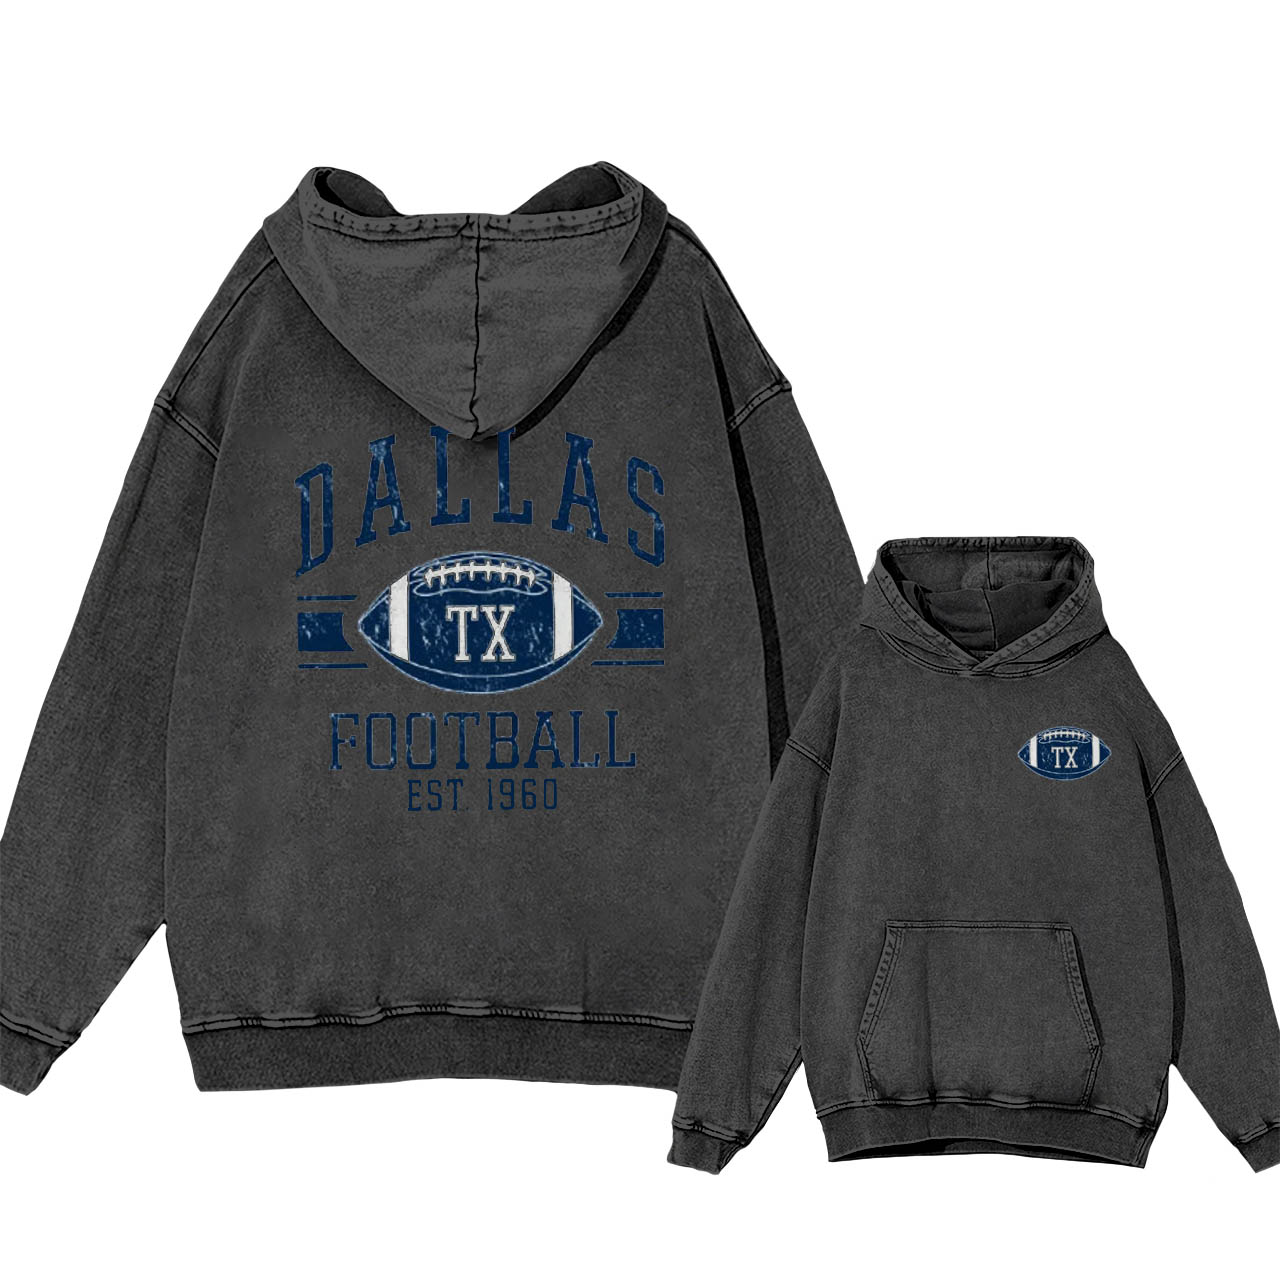 Cowboy Dallas Football EST.1960 Garment-Dye Hoodies